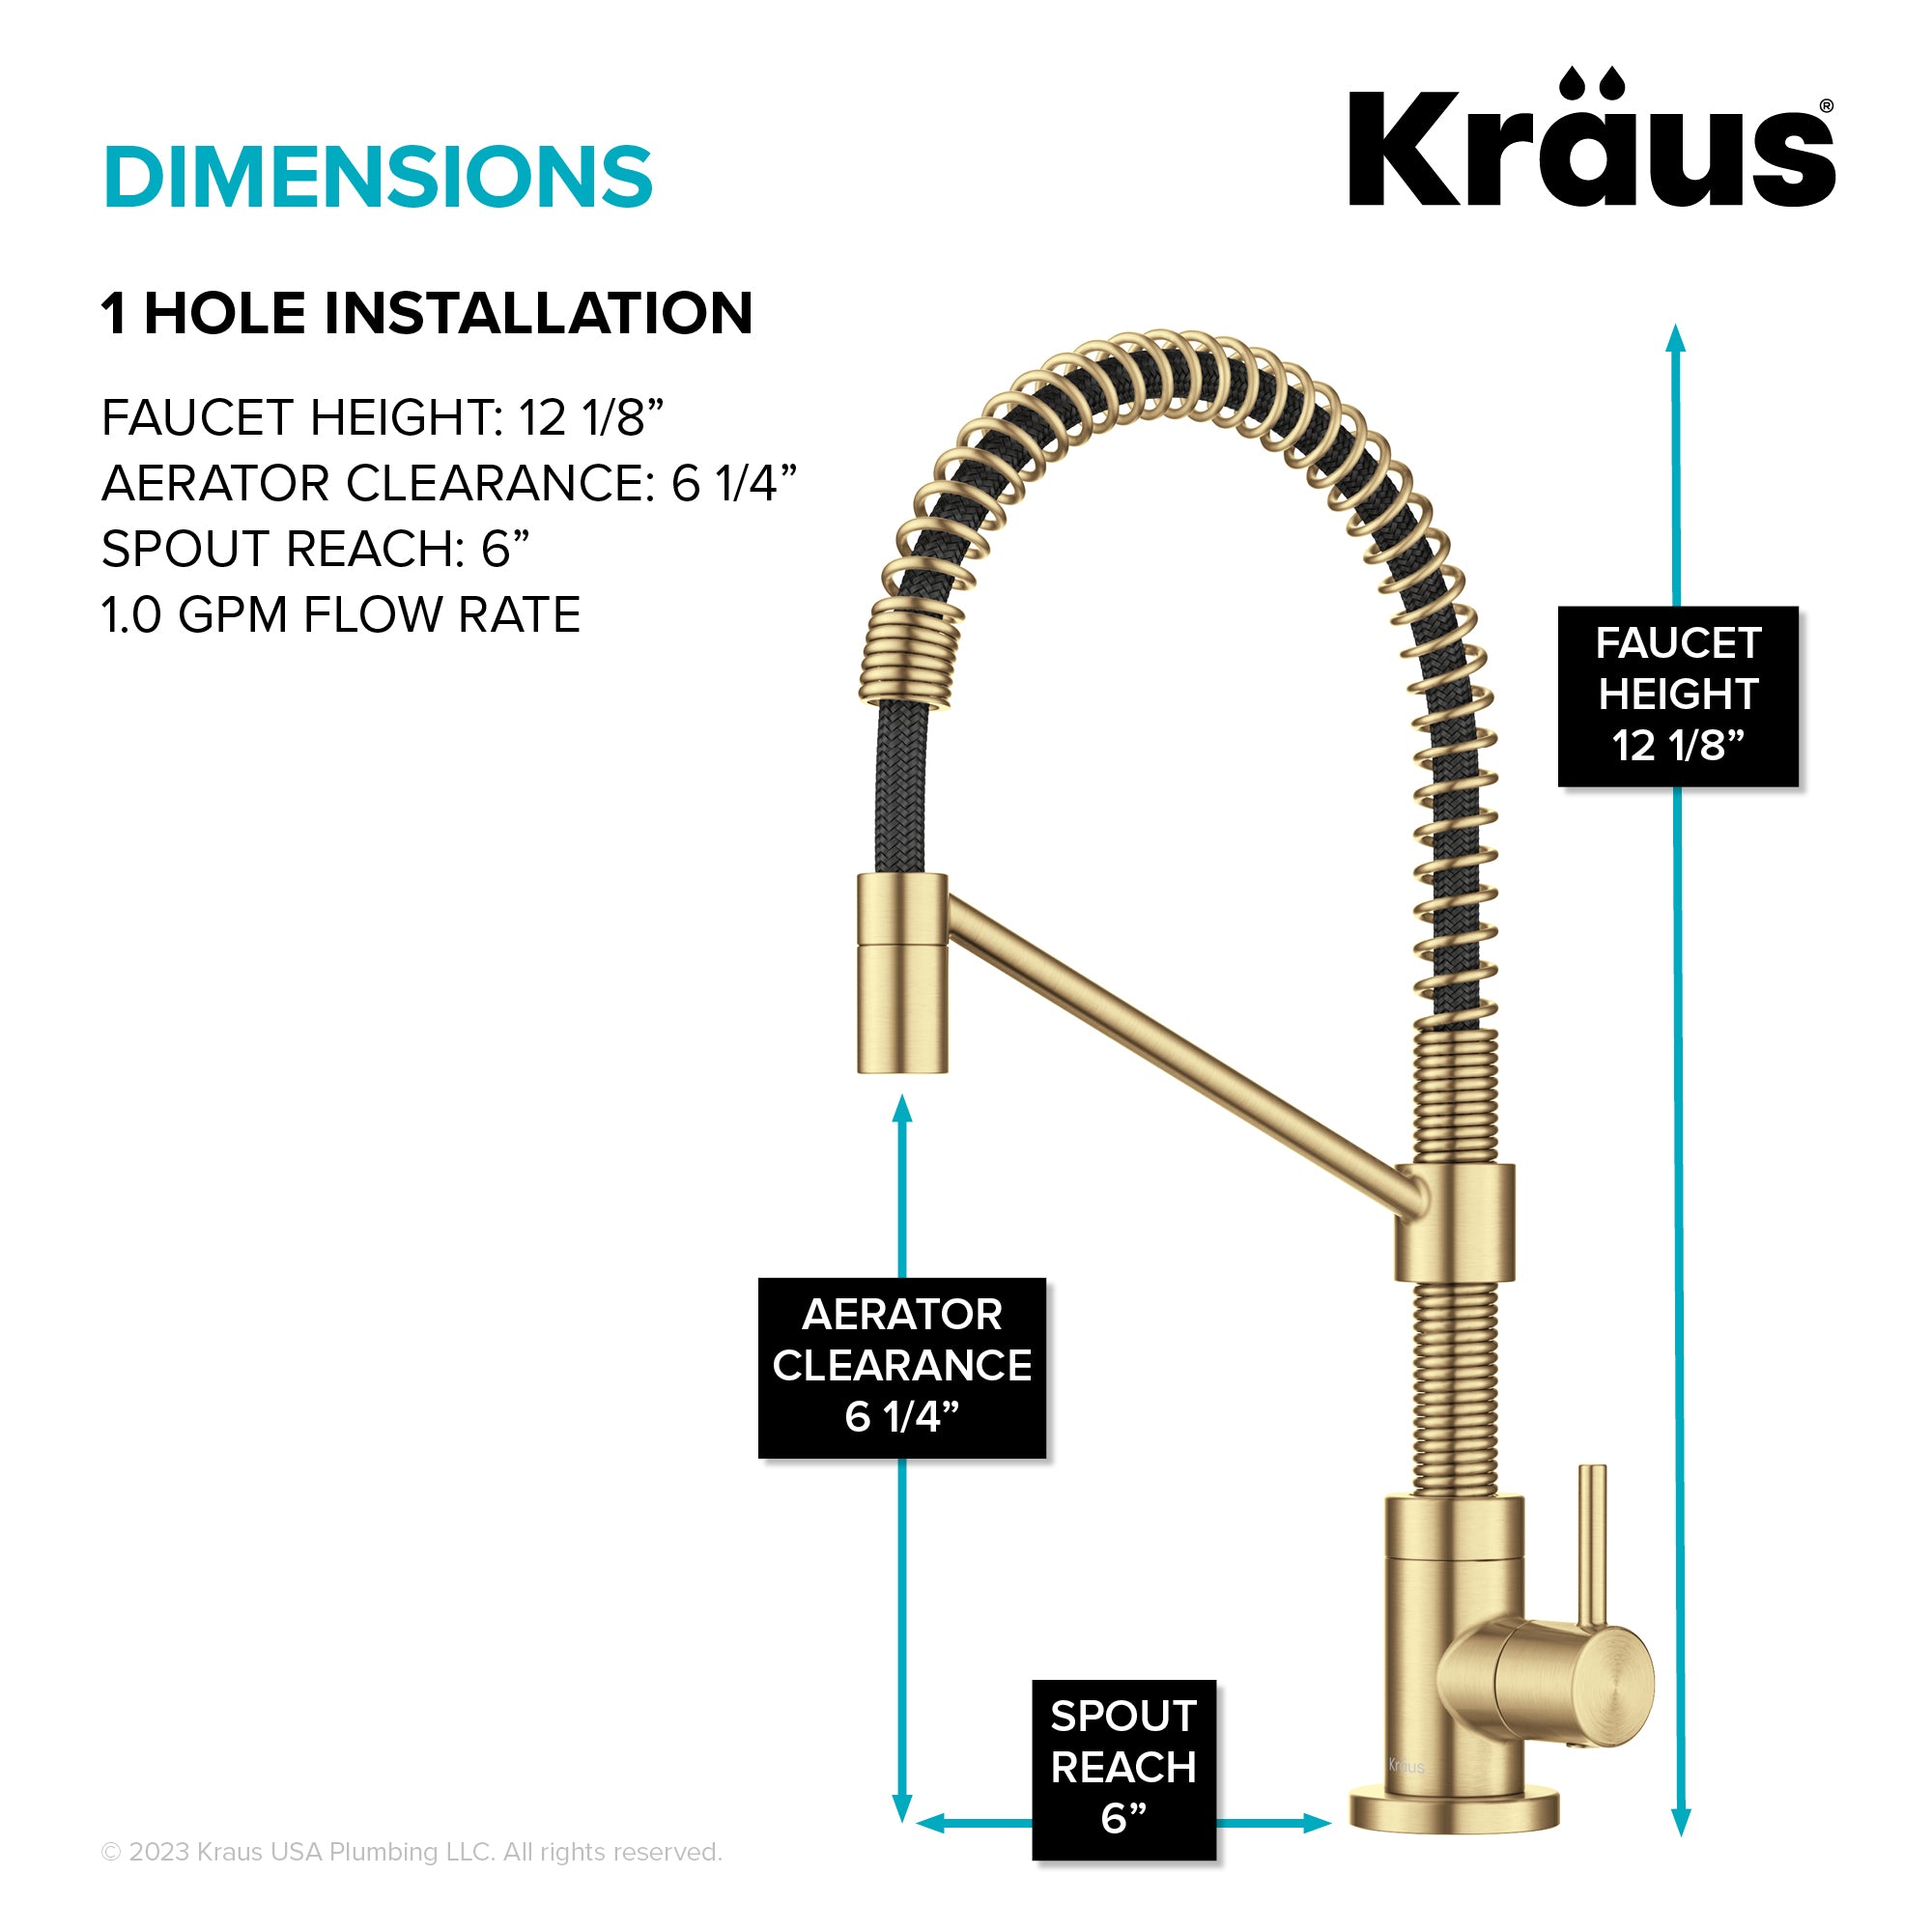 KRAUS Bolden Drinking Water Filter Faucet in Brushed Brass